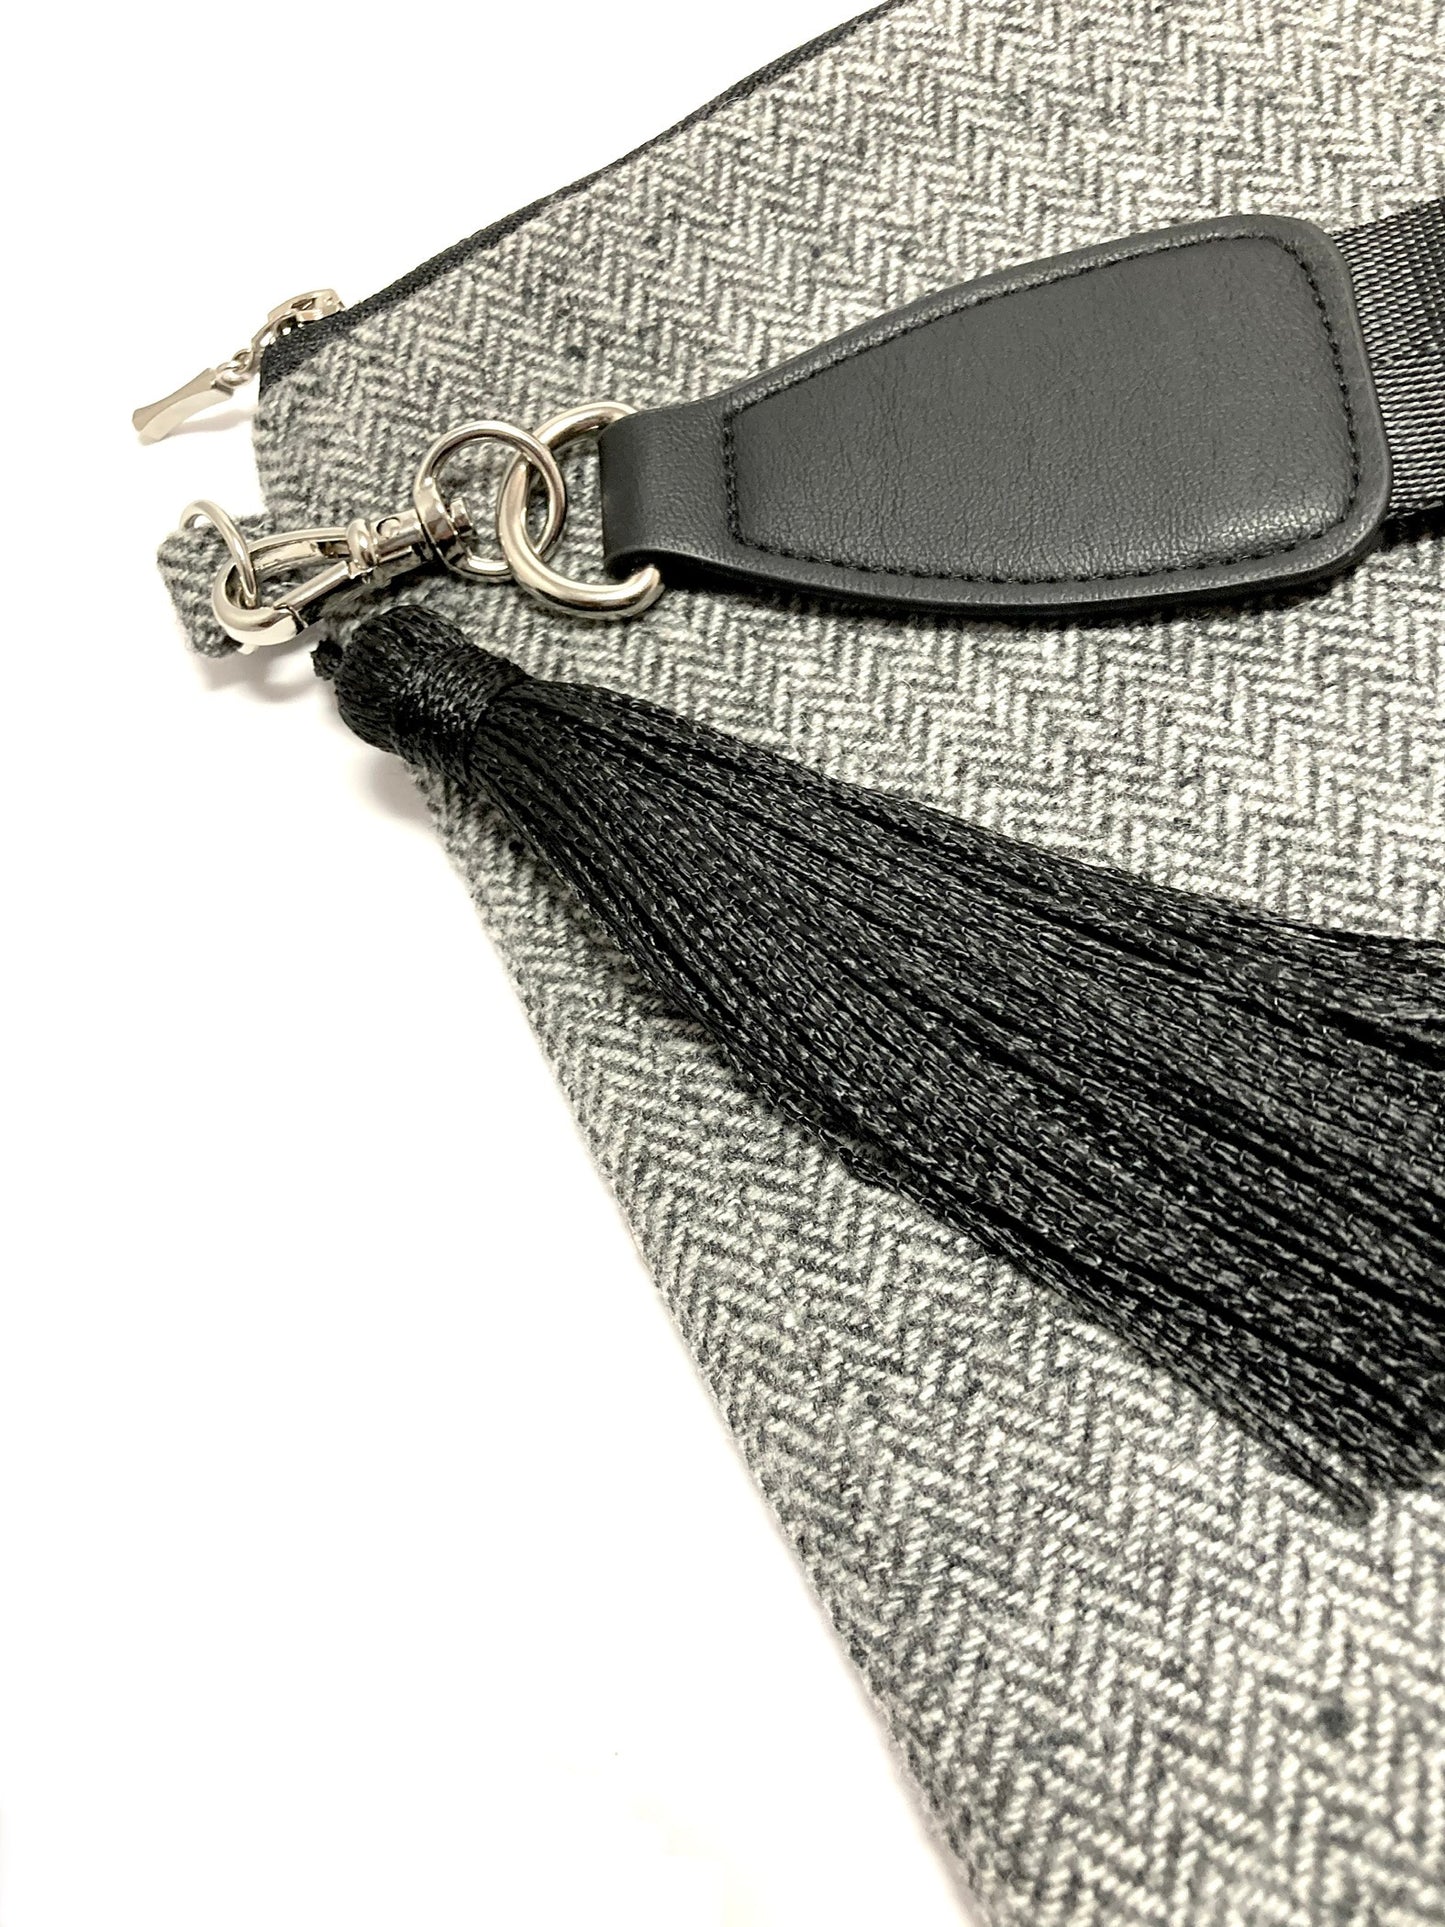 Grey woolen bag with tassel